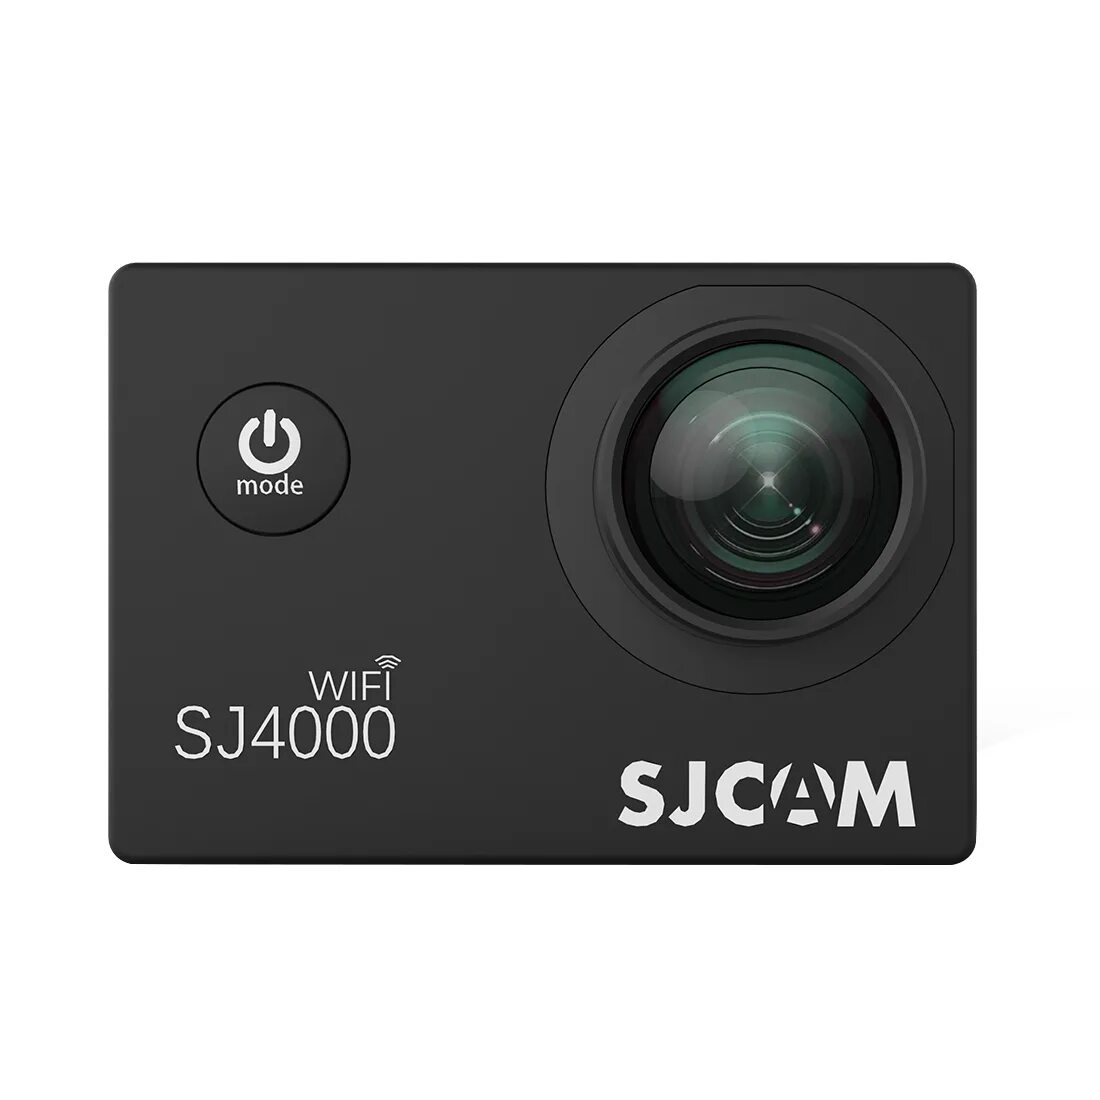 В каком году вышла камера. Экшн видеокамера SJCAM sj4000 WIFI Black. SJCAM sj4000 WIFI комплектация. SJCAM sj4000 WIFI фотокамера. SD для экшен камеры SJCAM sj4000 WIFI.